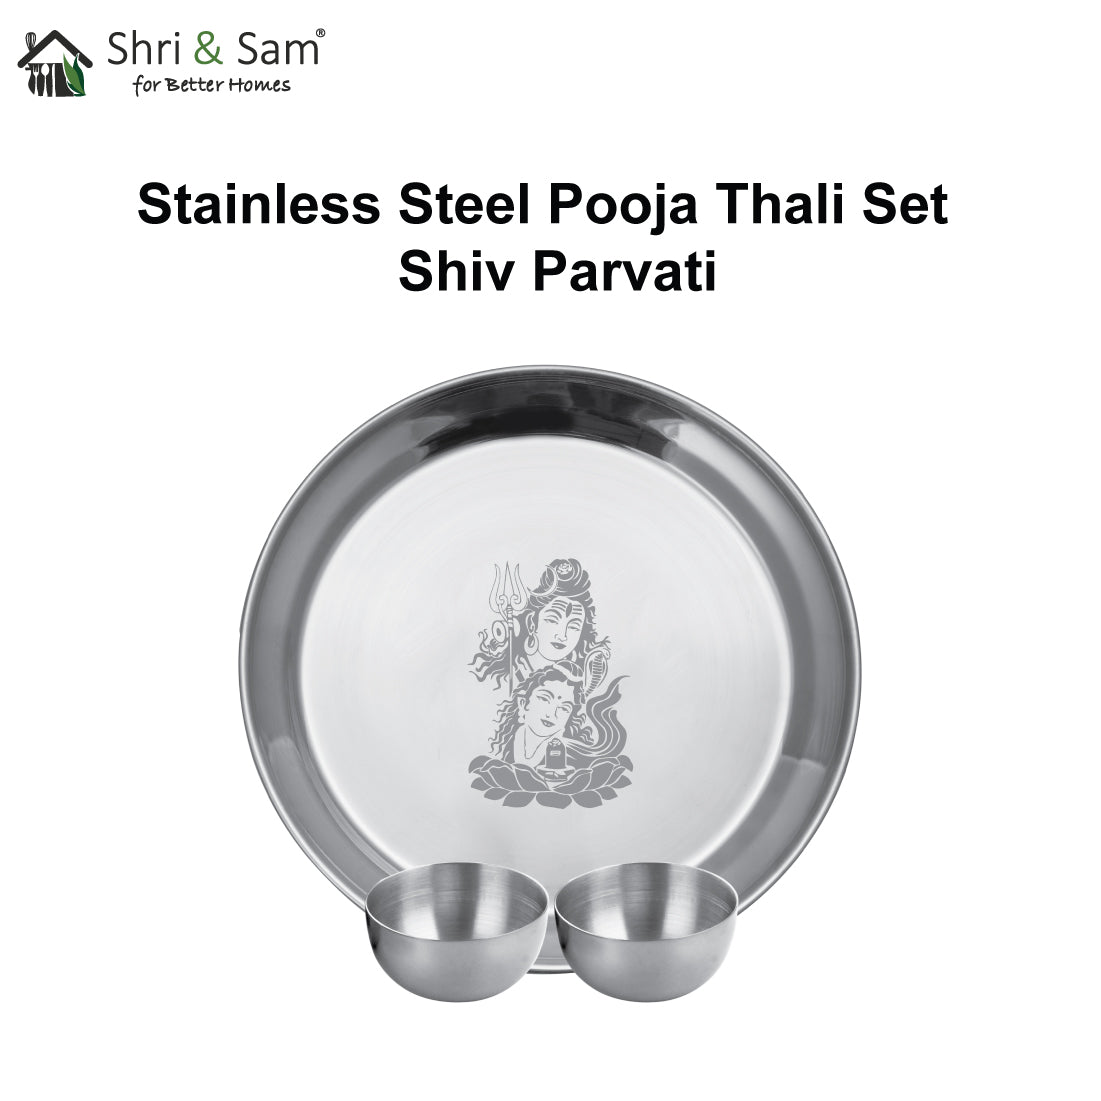 Stainless Steel Pooja Thali Set Shiv Parvati